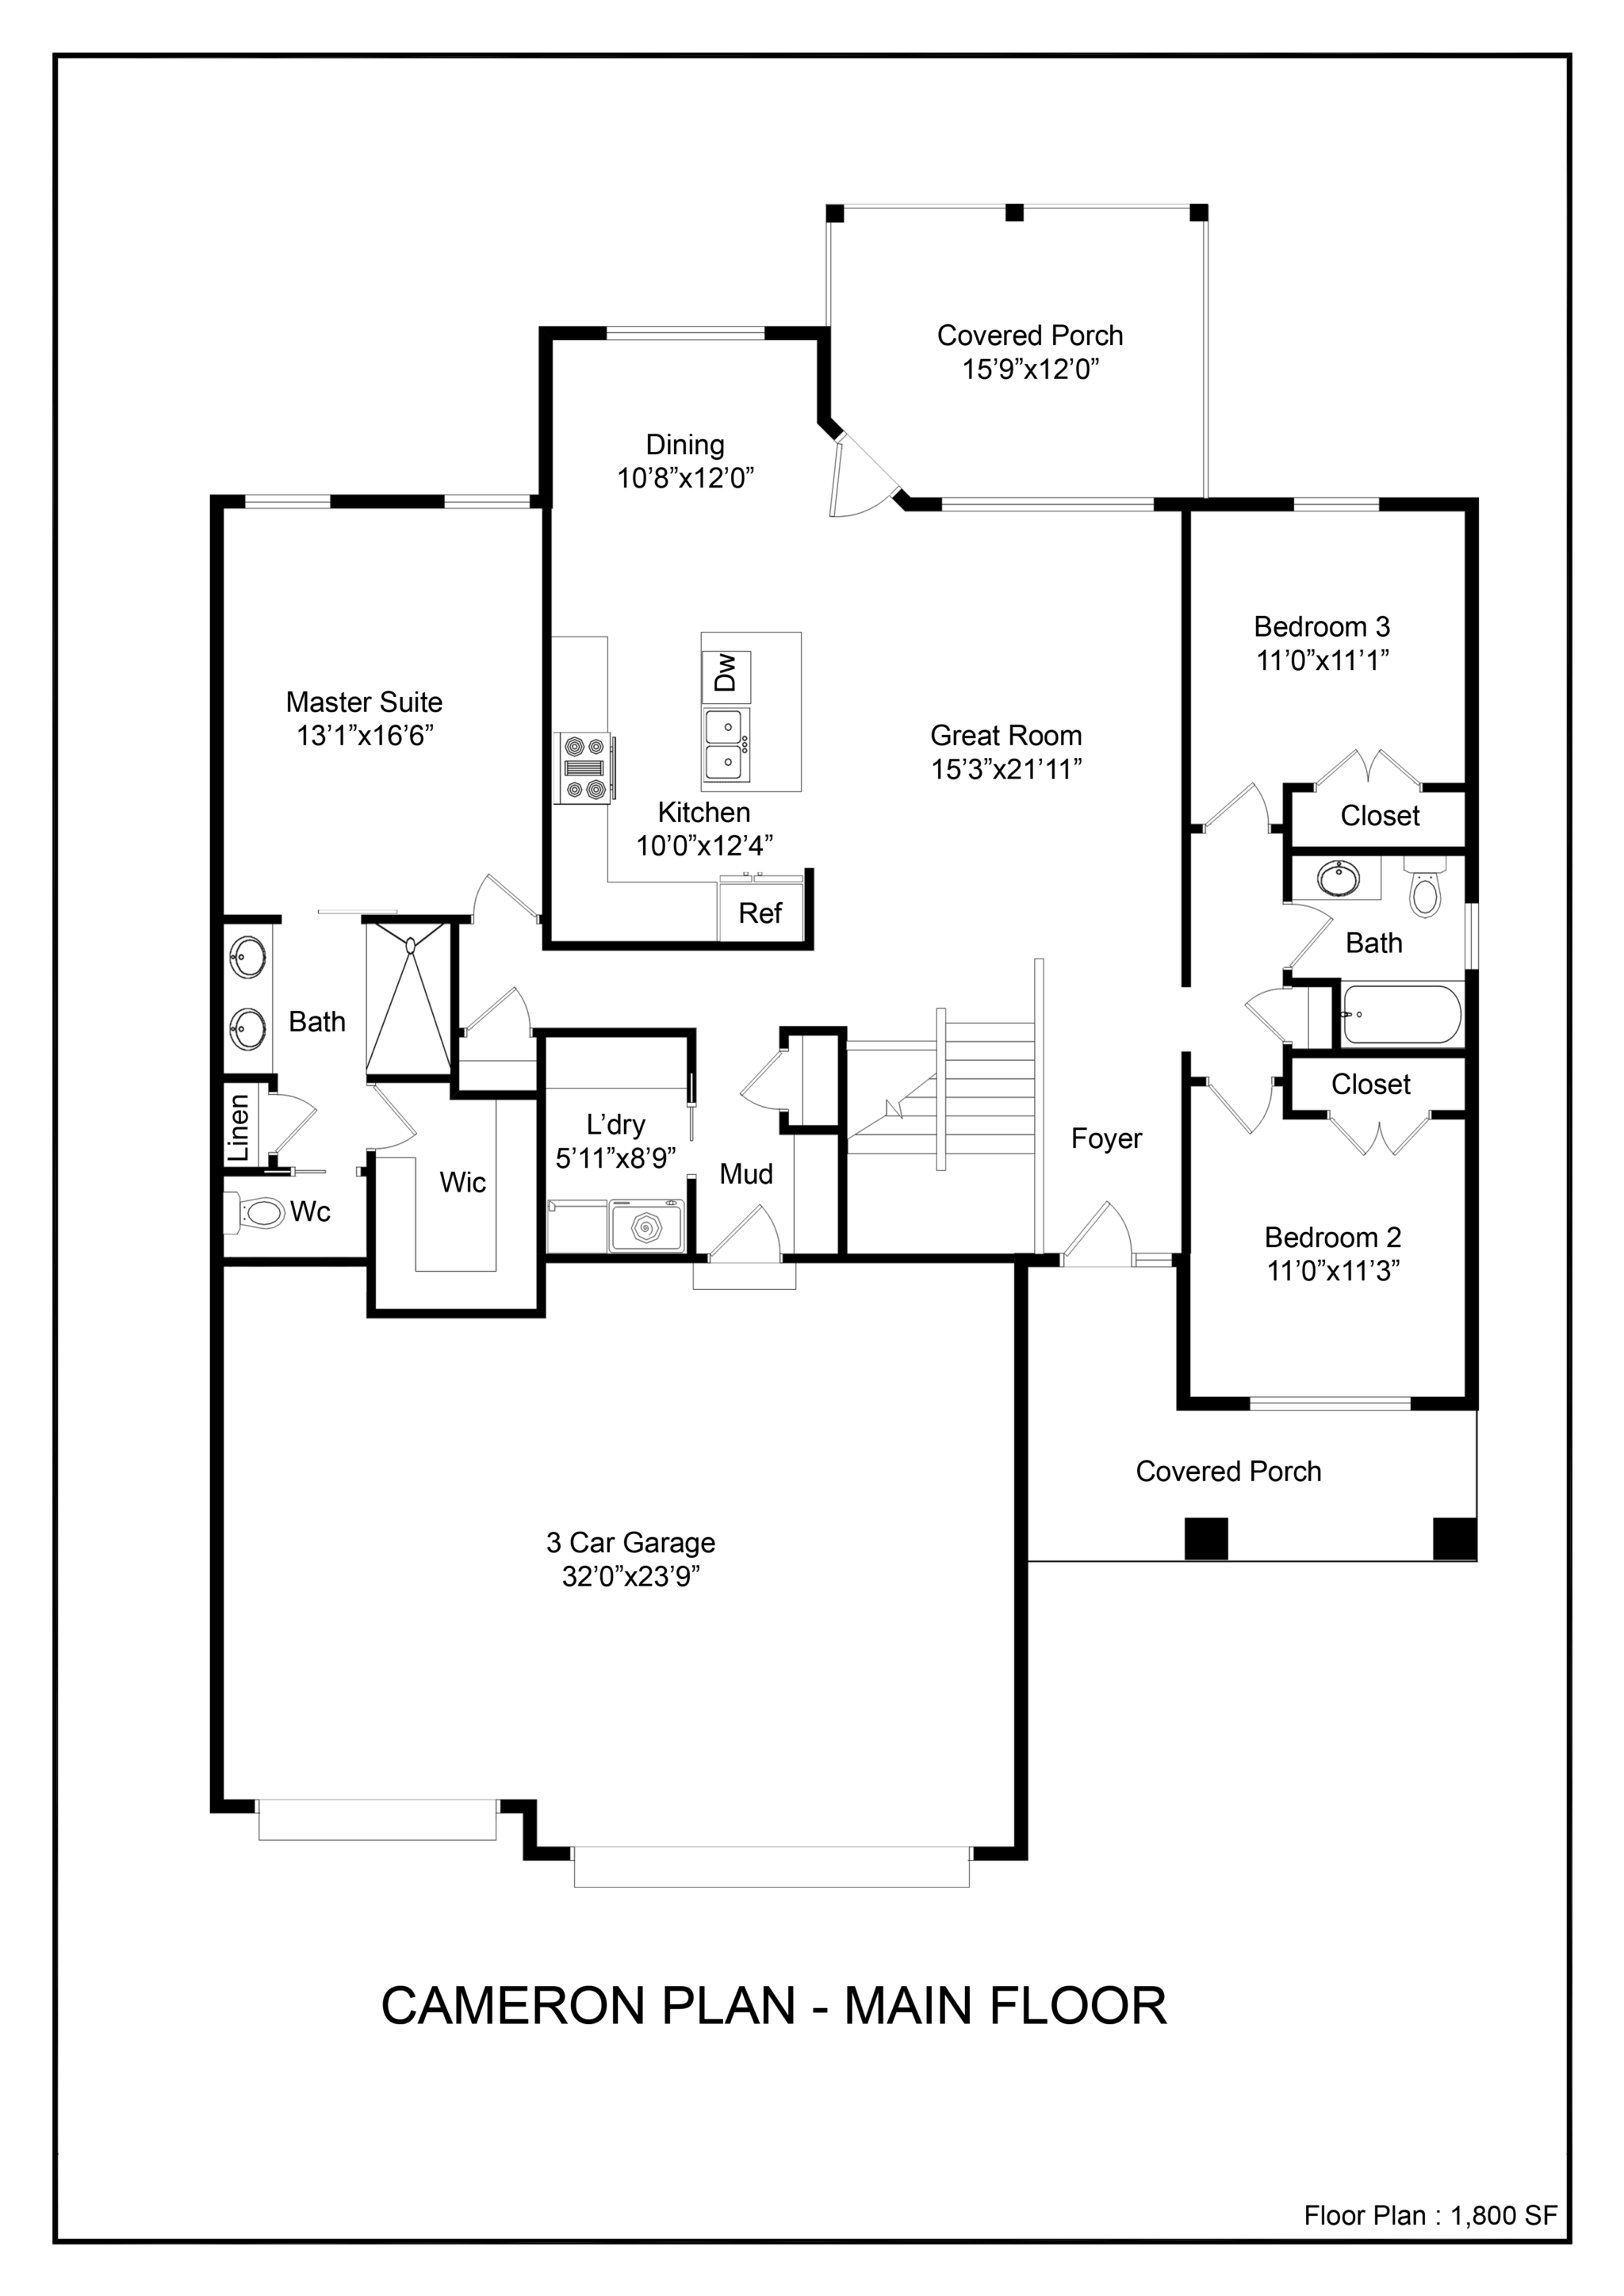 cameron plan - main floor